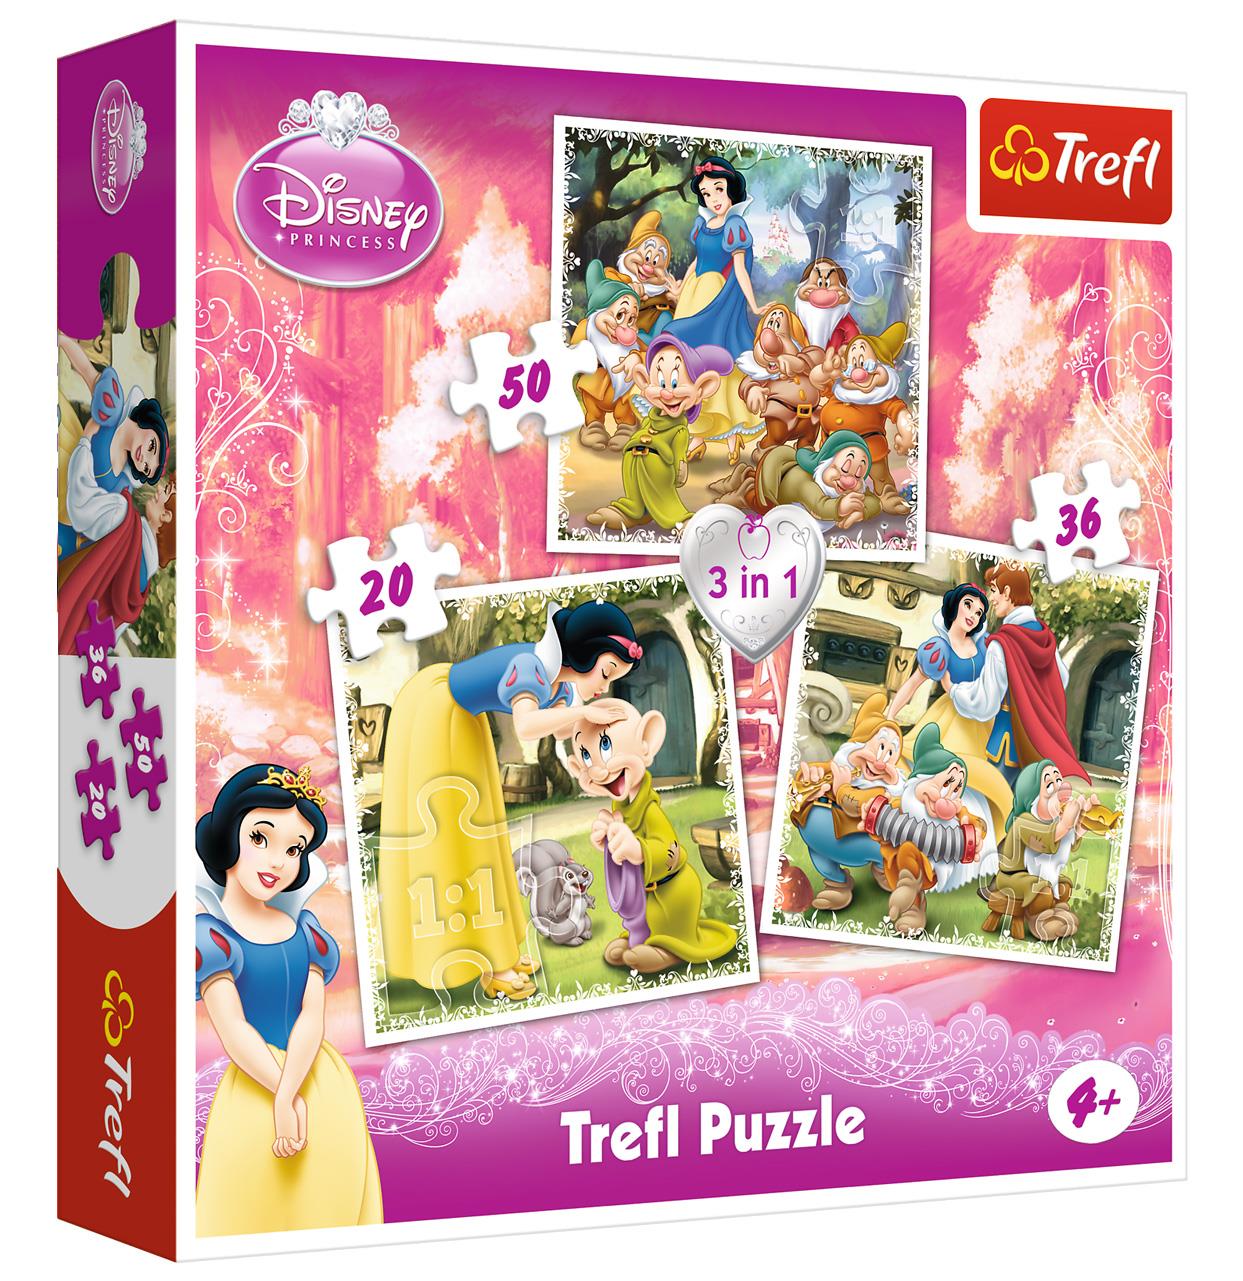 Trefl Çocuk Puzzle 34038 Snow White, Disney 20+36+50 Parça 3 in 1 Puzzle